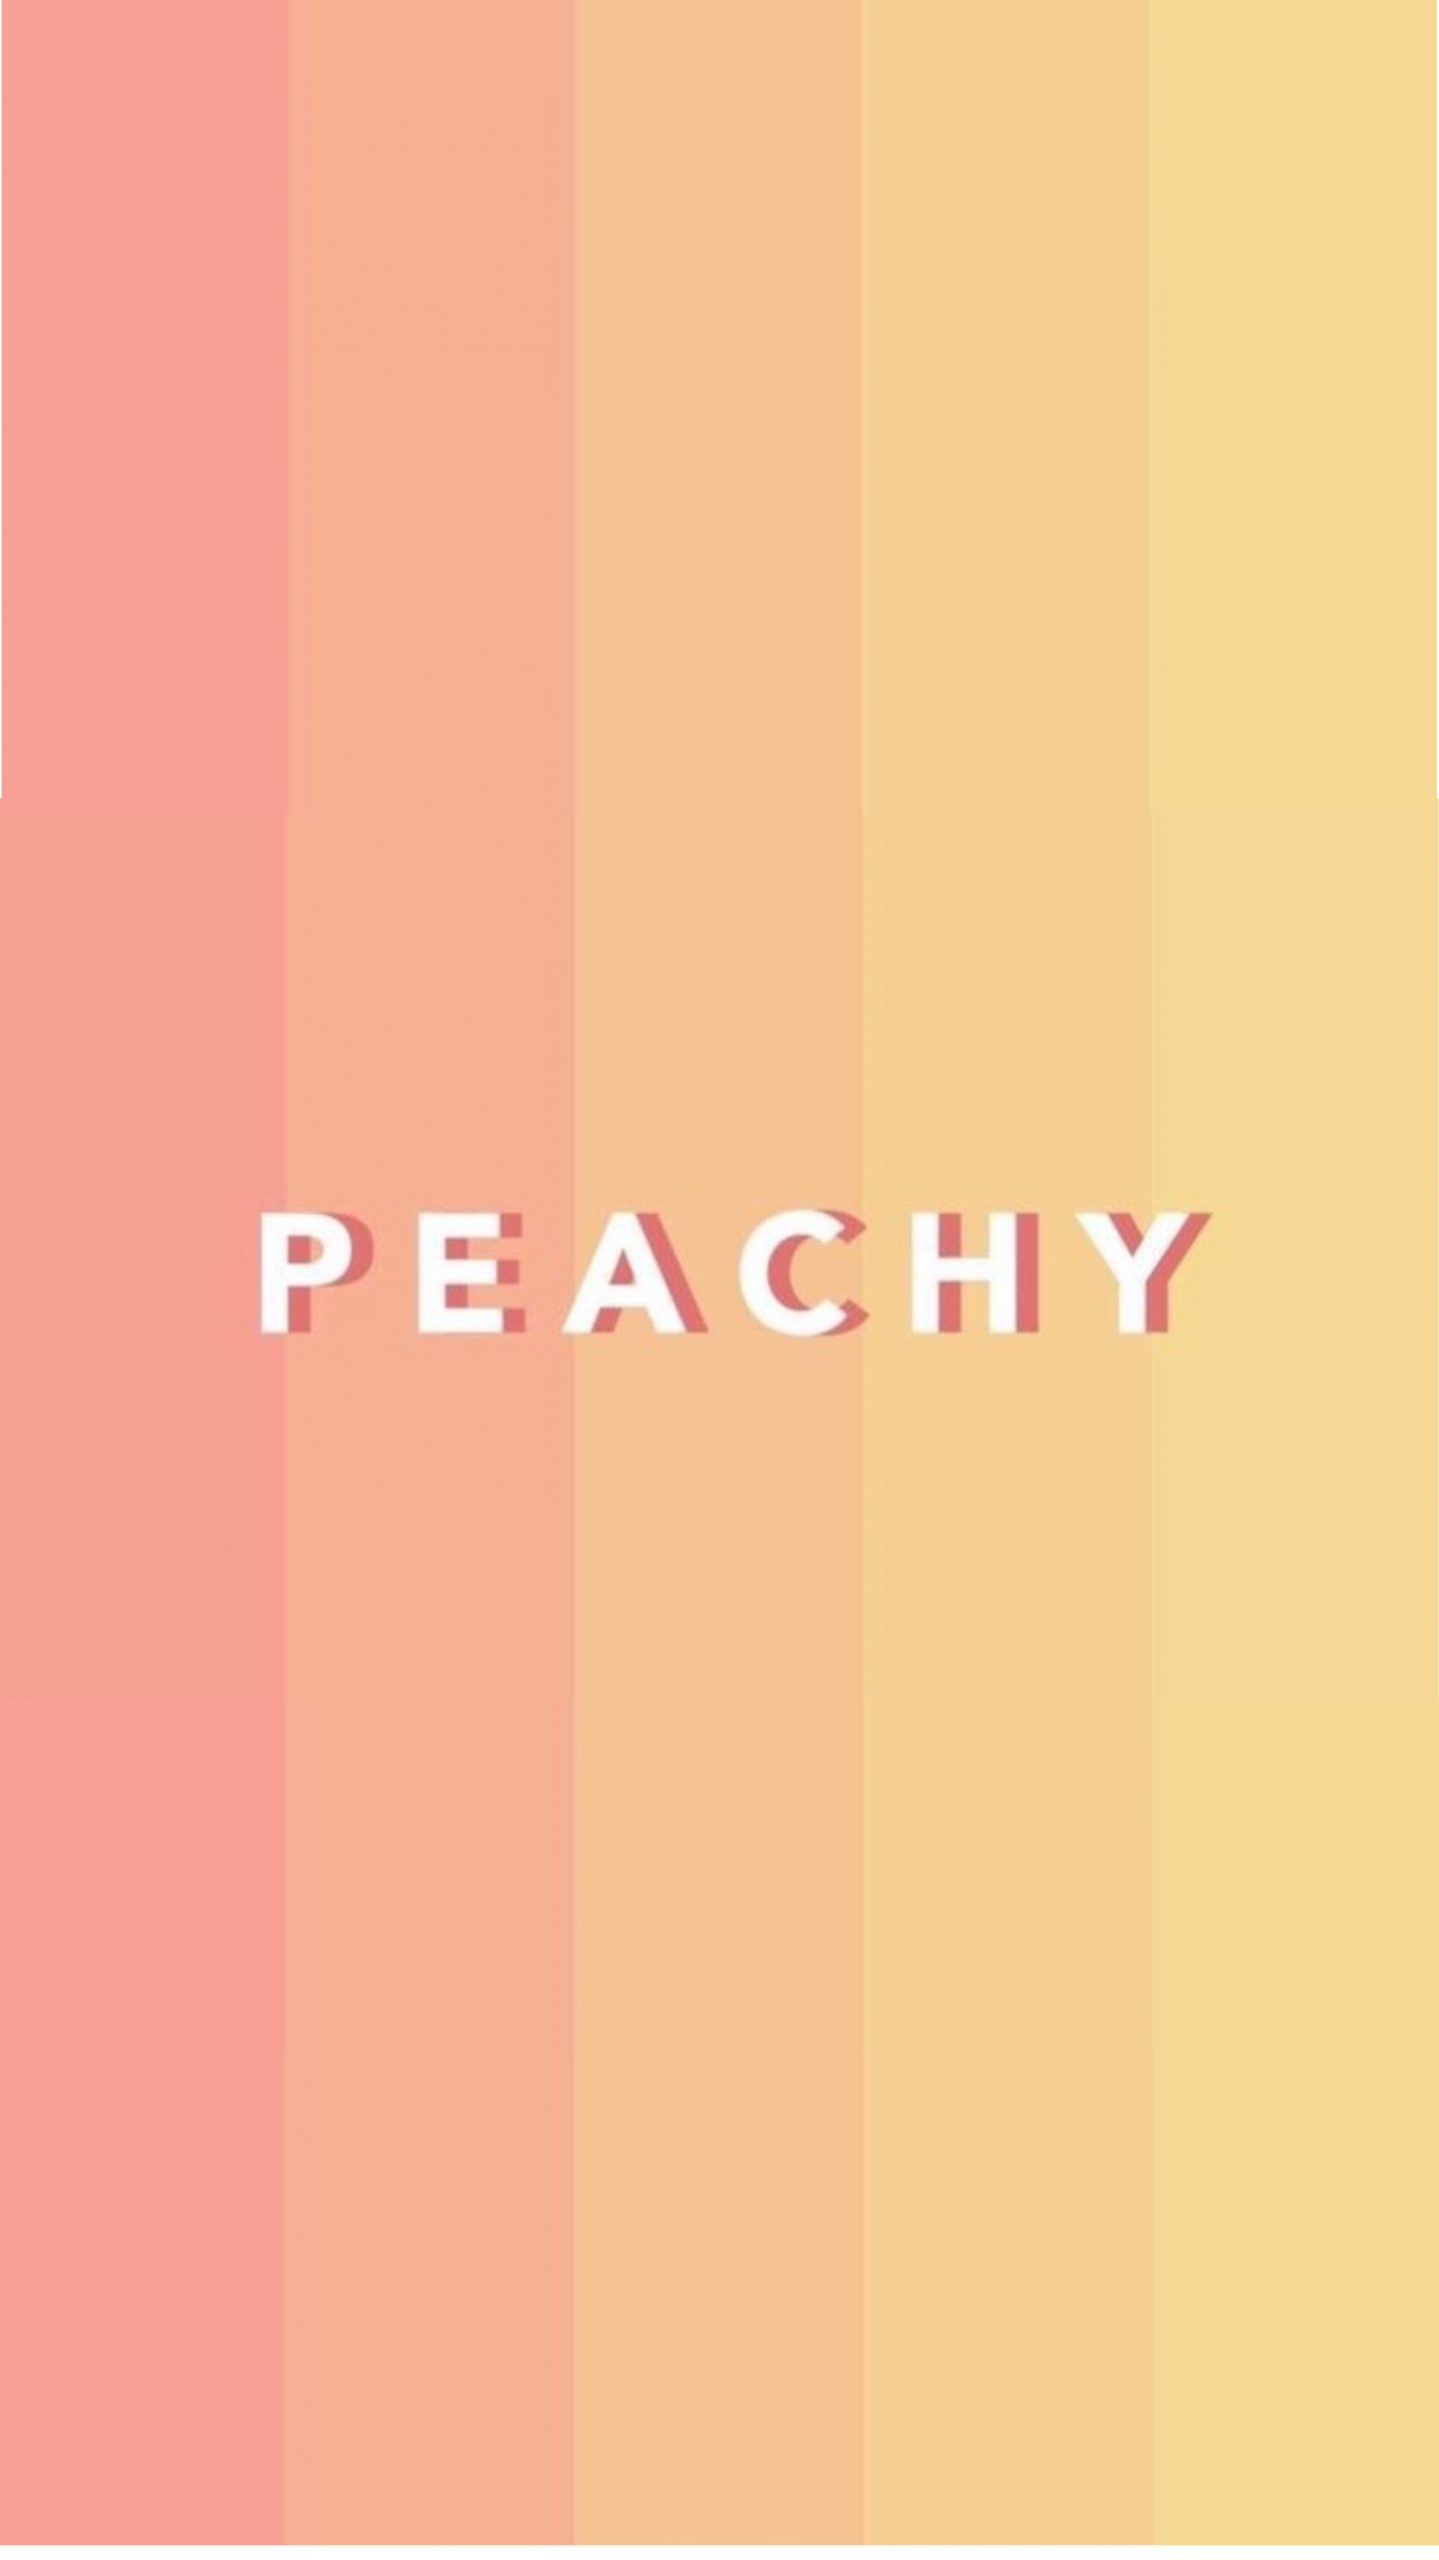 A poster for the movie peachy - Peach